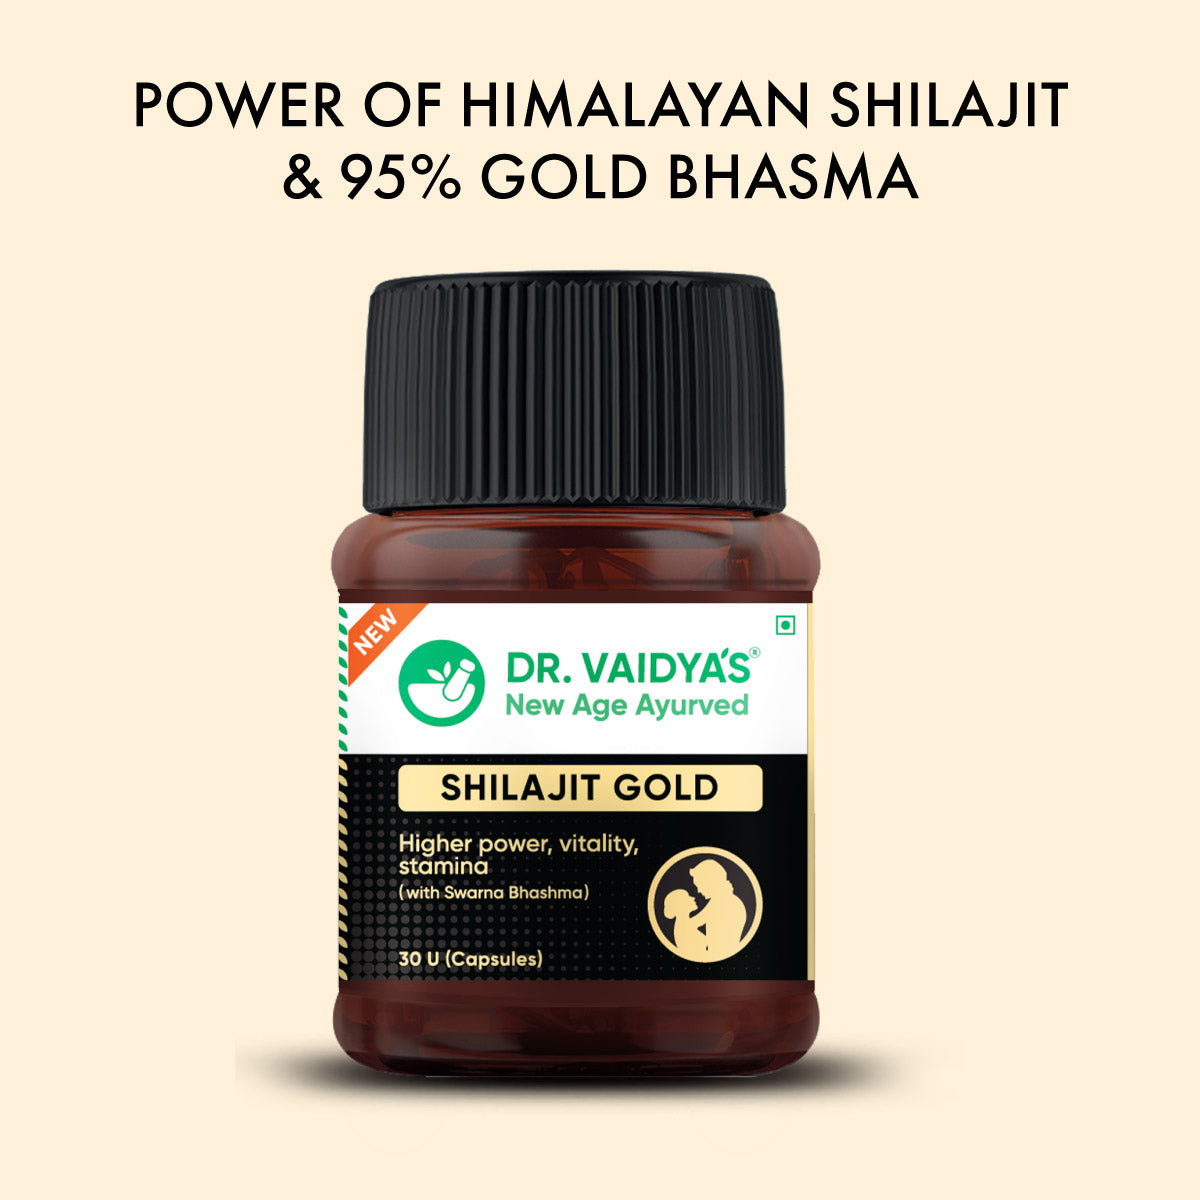 Dr. Vaidya's Shilajit Gold Capsule